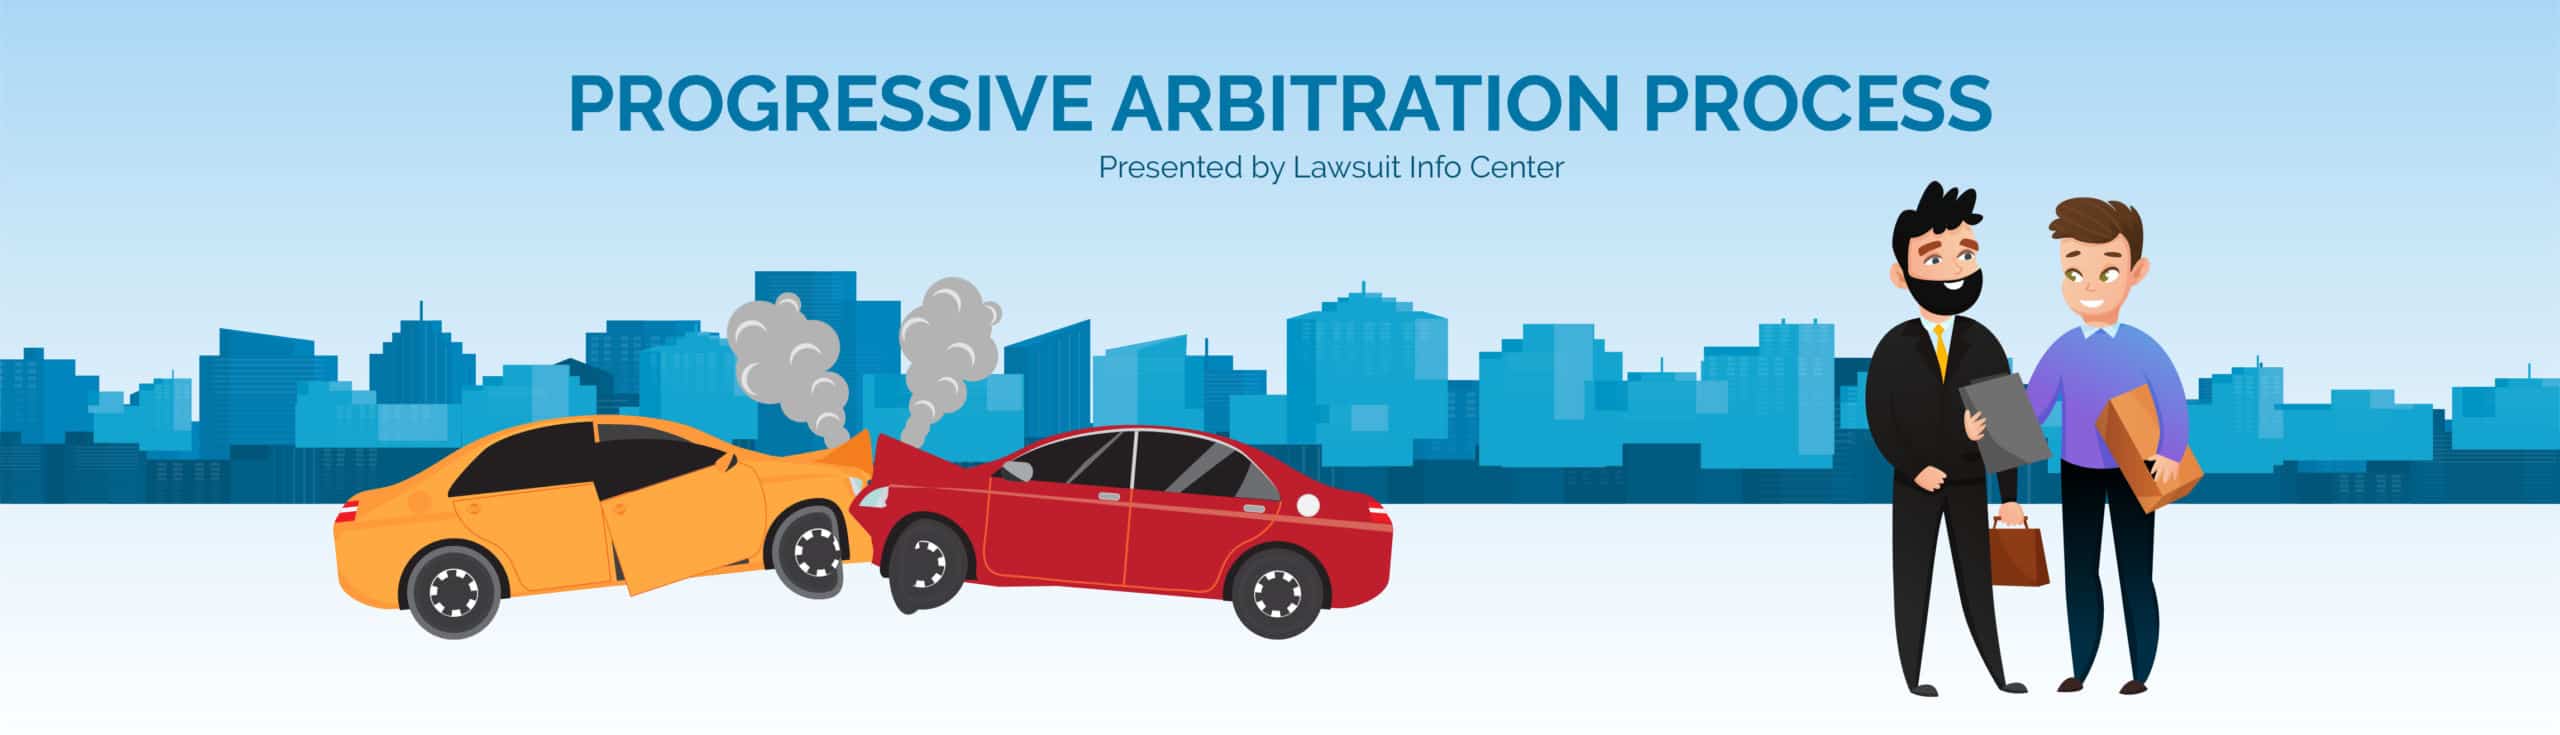 Progressive Arbitration Process